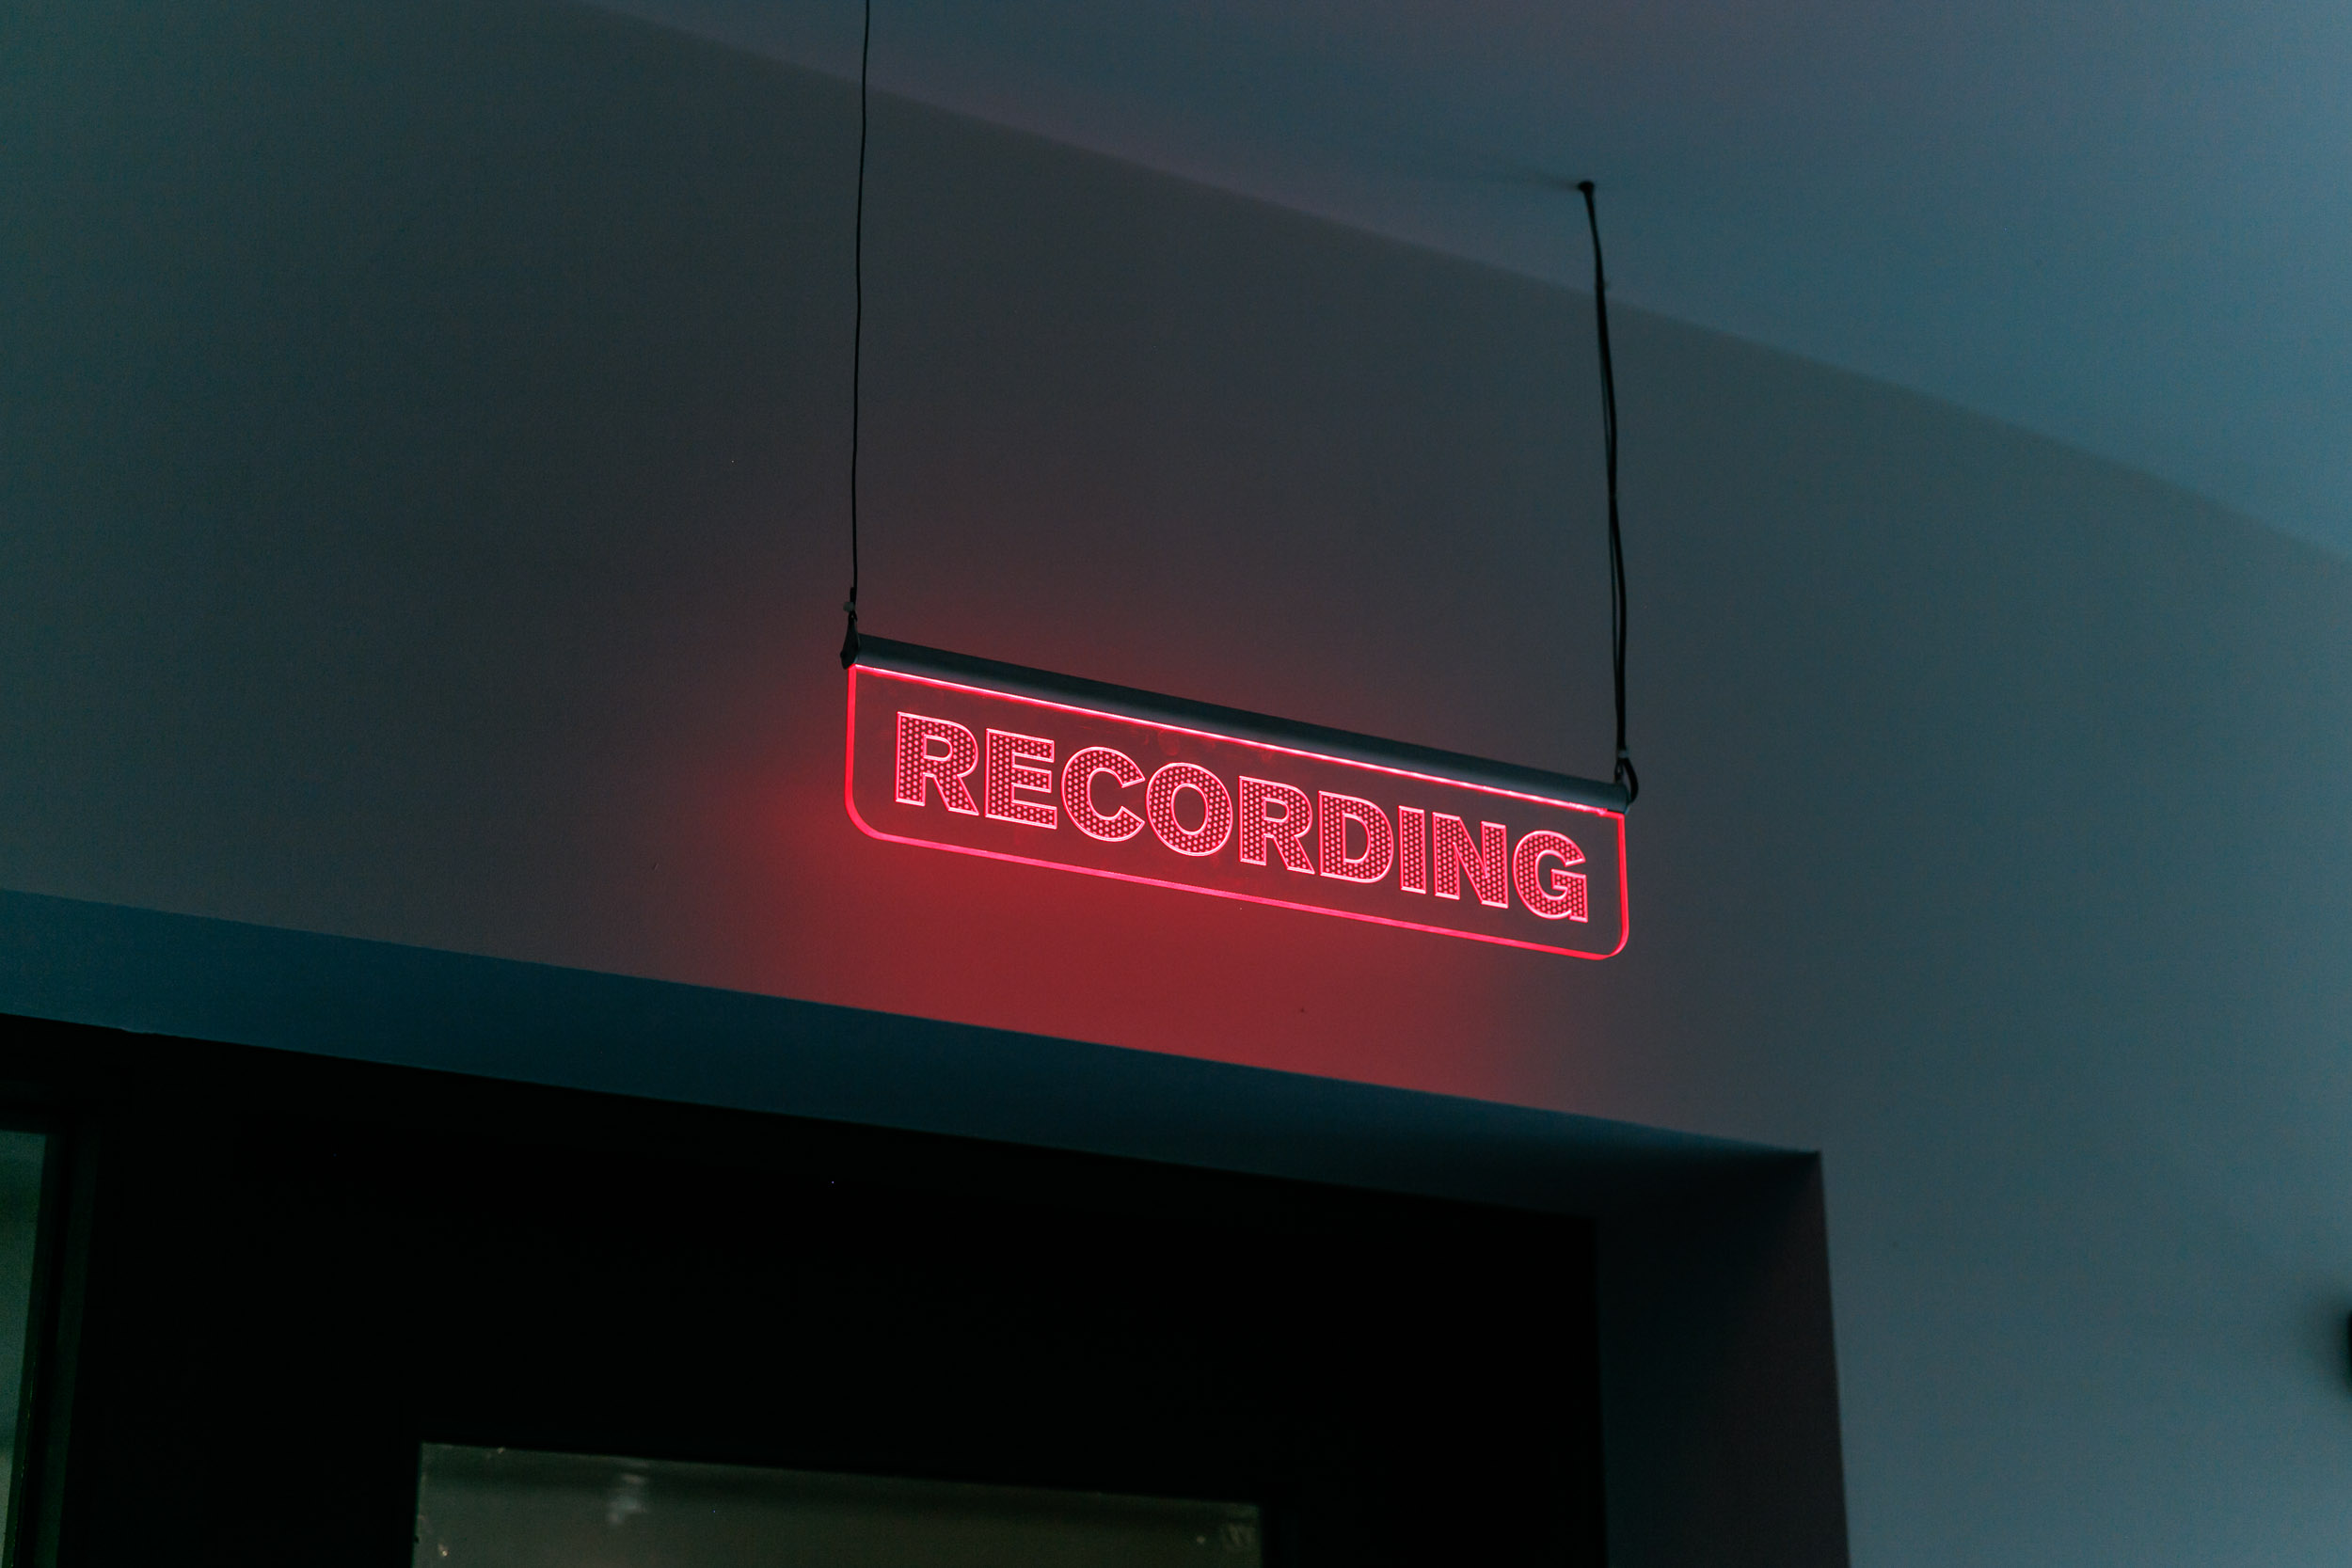  Wavefield Recording Studio, Clonakilty 